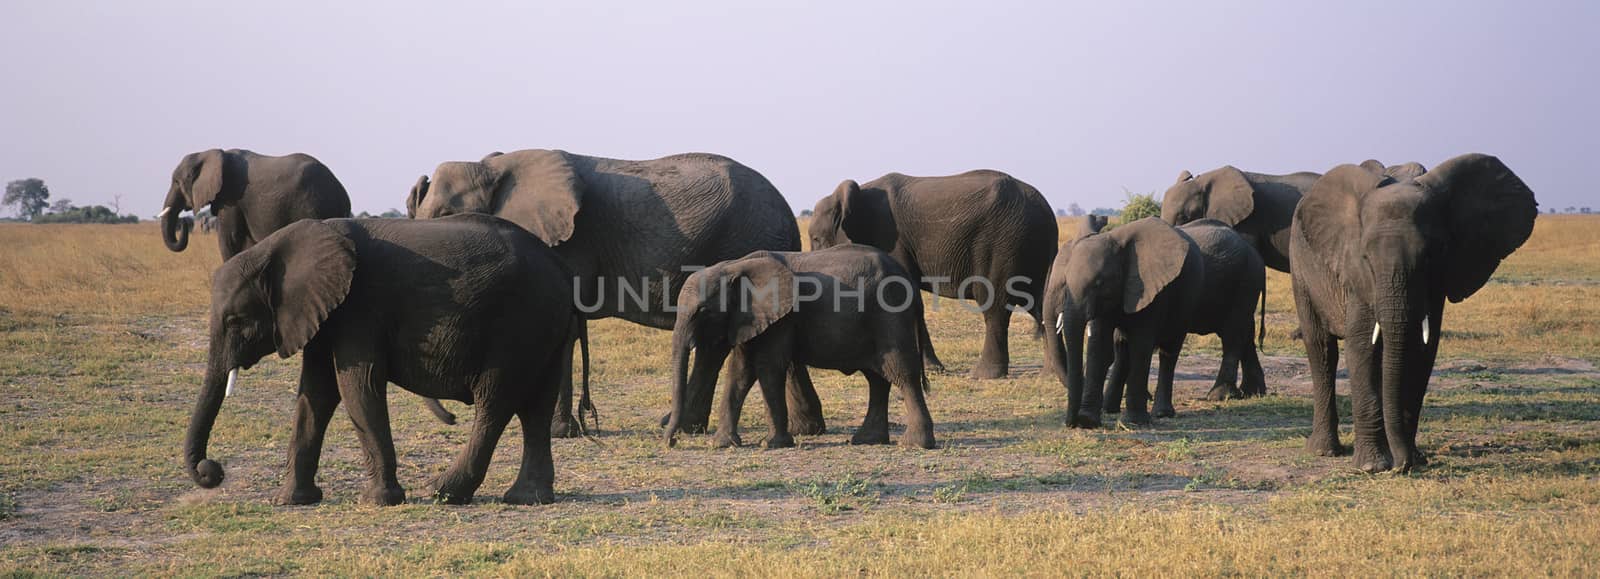 African Elephants (Loxodonta Africana) on savannah by moodboard